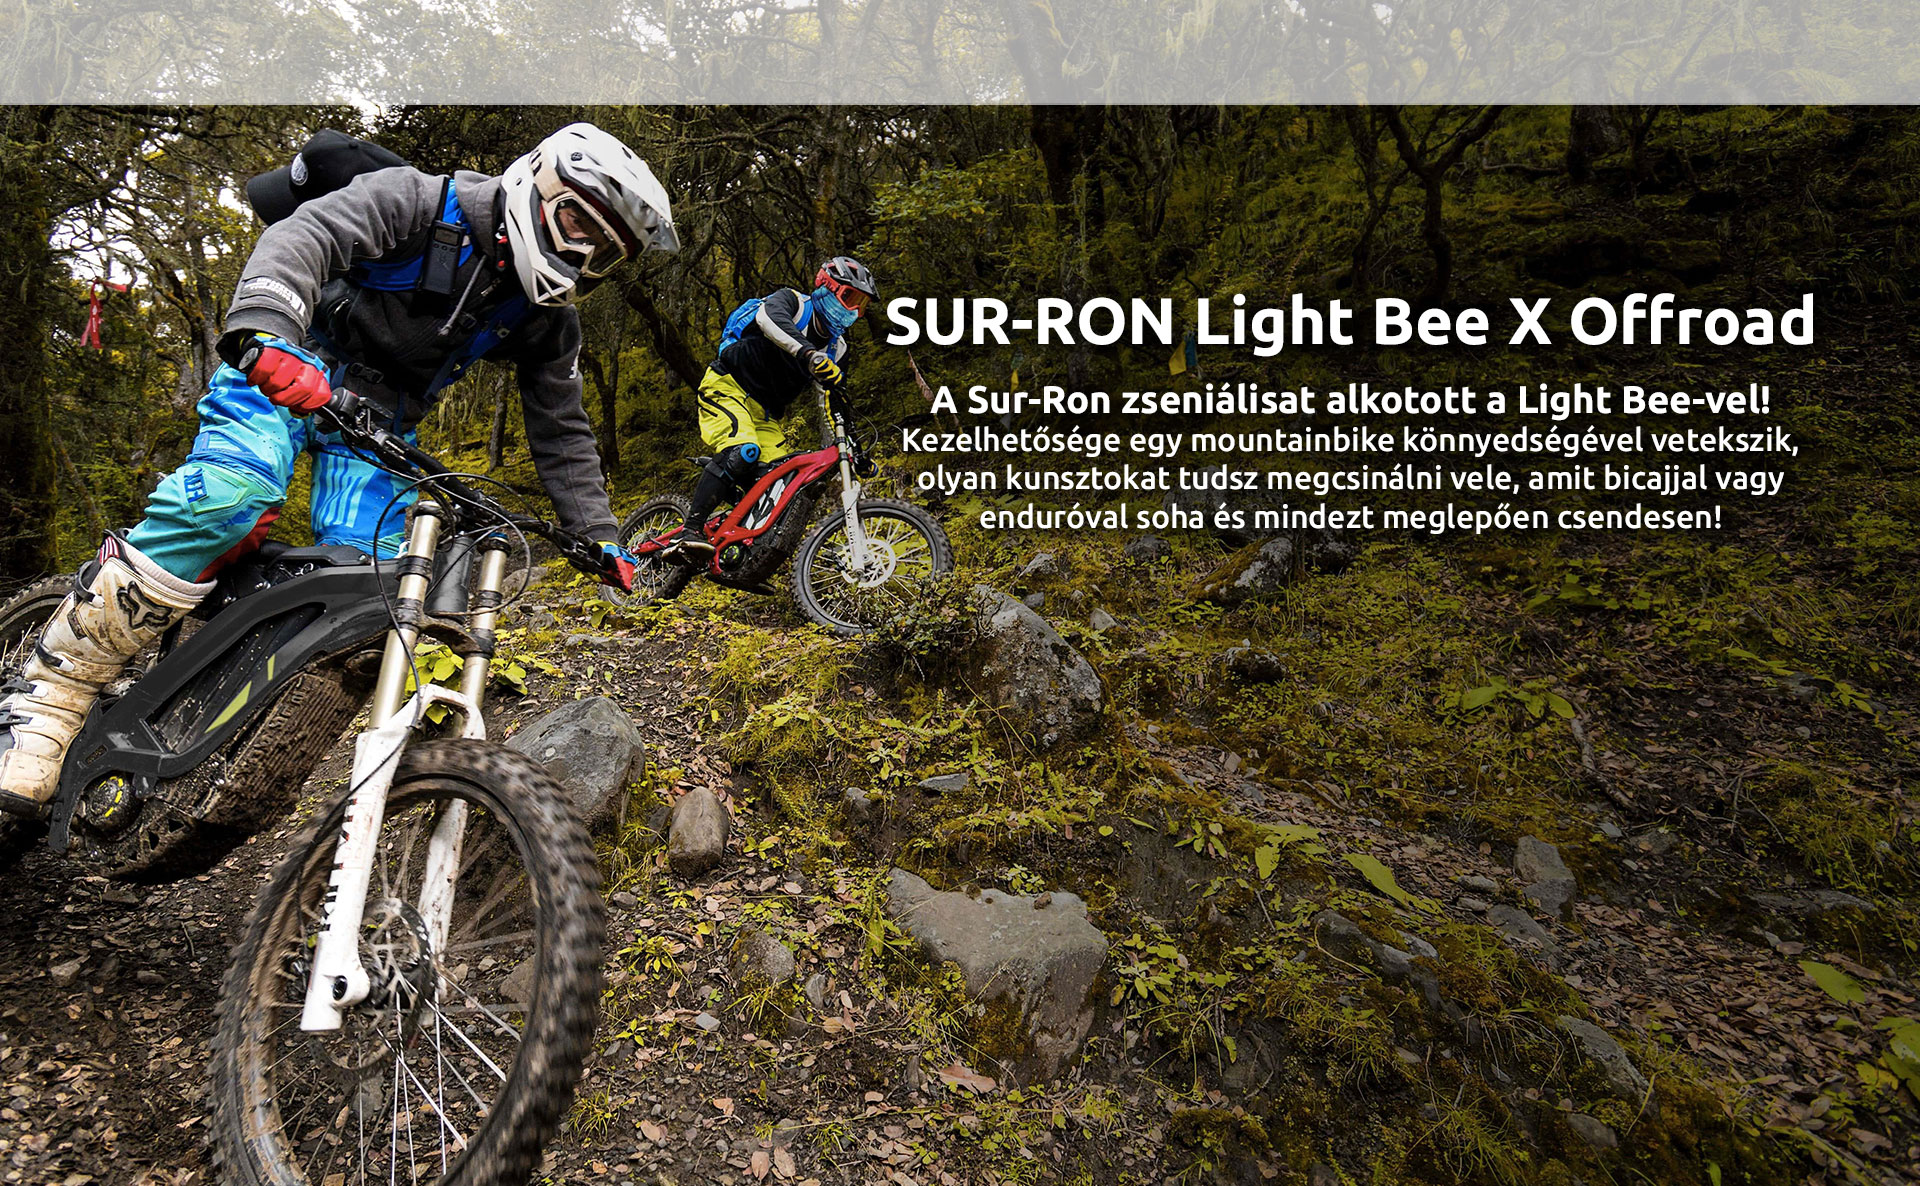 Sur-Ron Light Bee X offroad